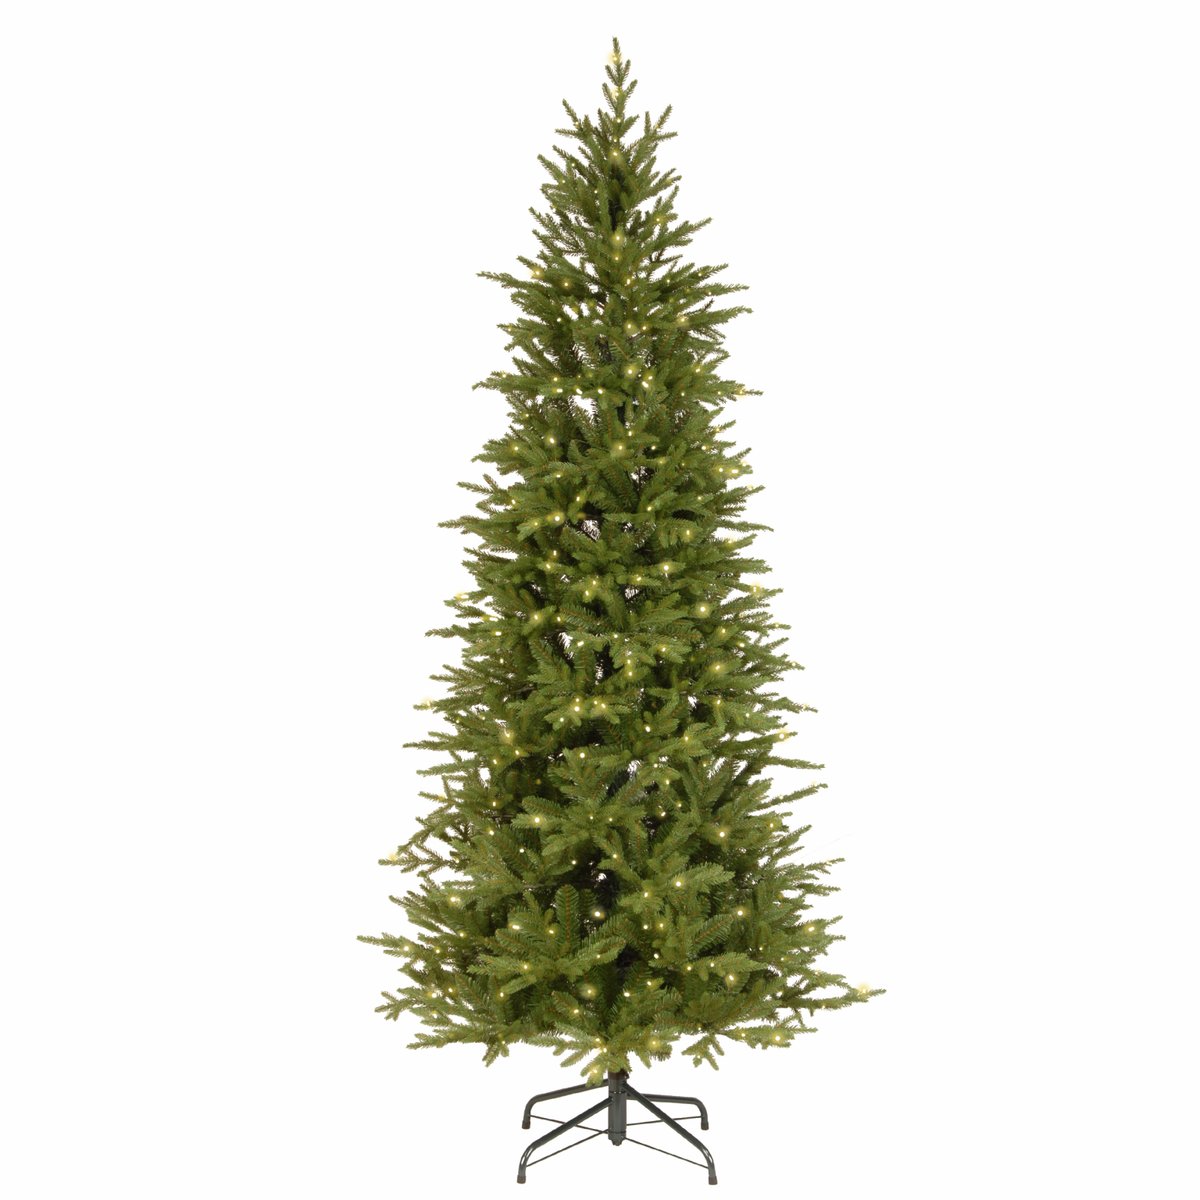 Bedminster Slim Prelit Christmas Tree - 6.5ft - image 1